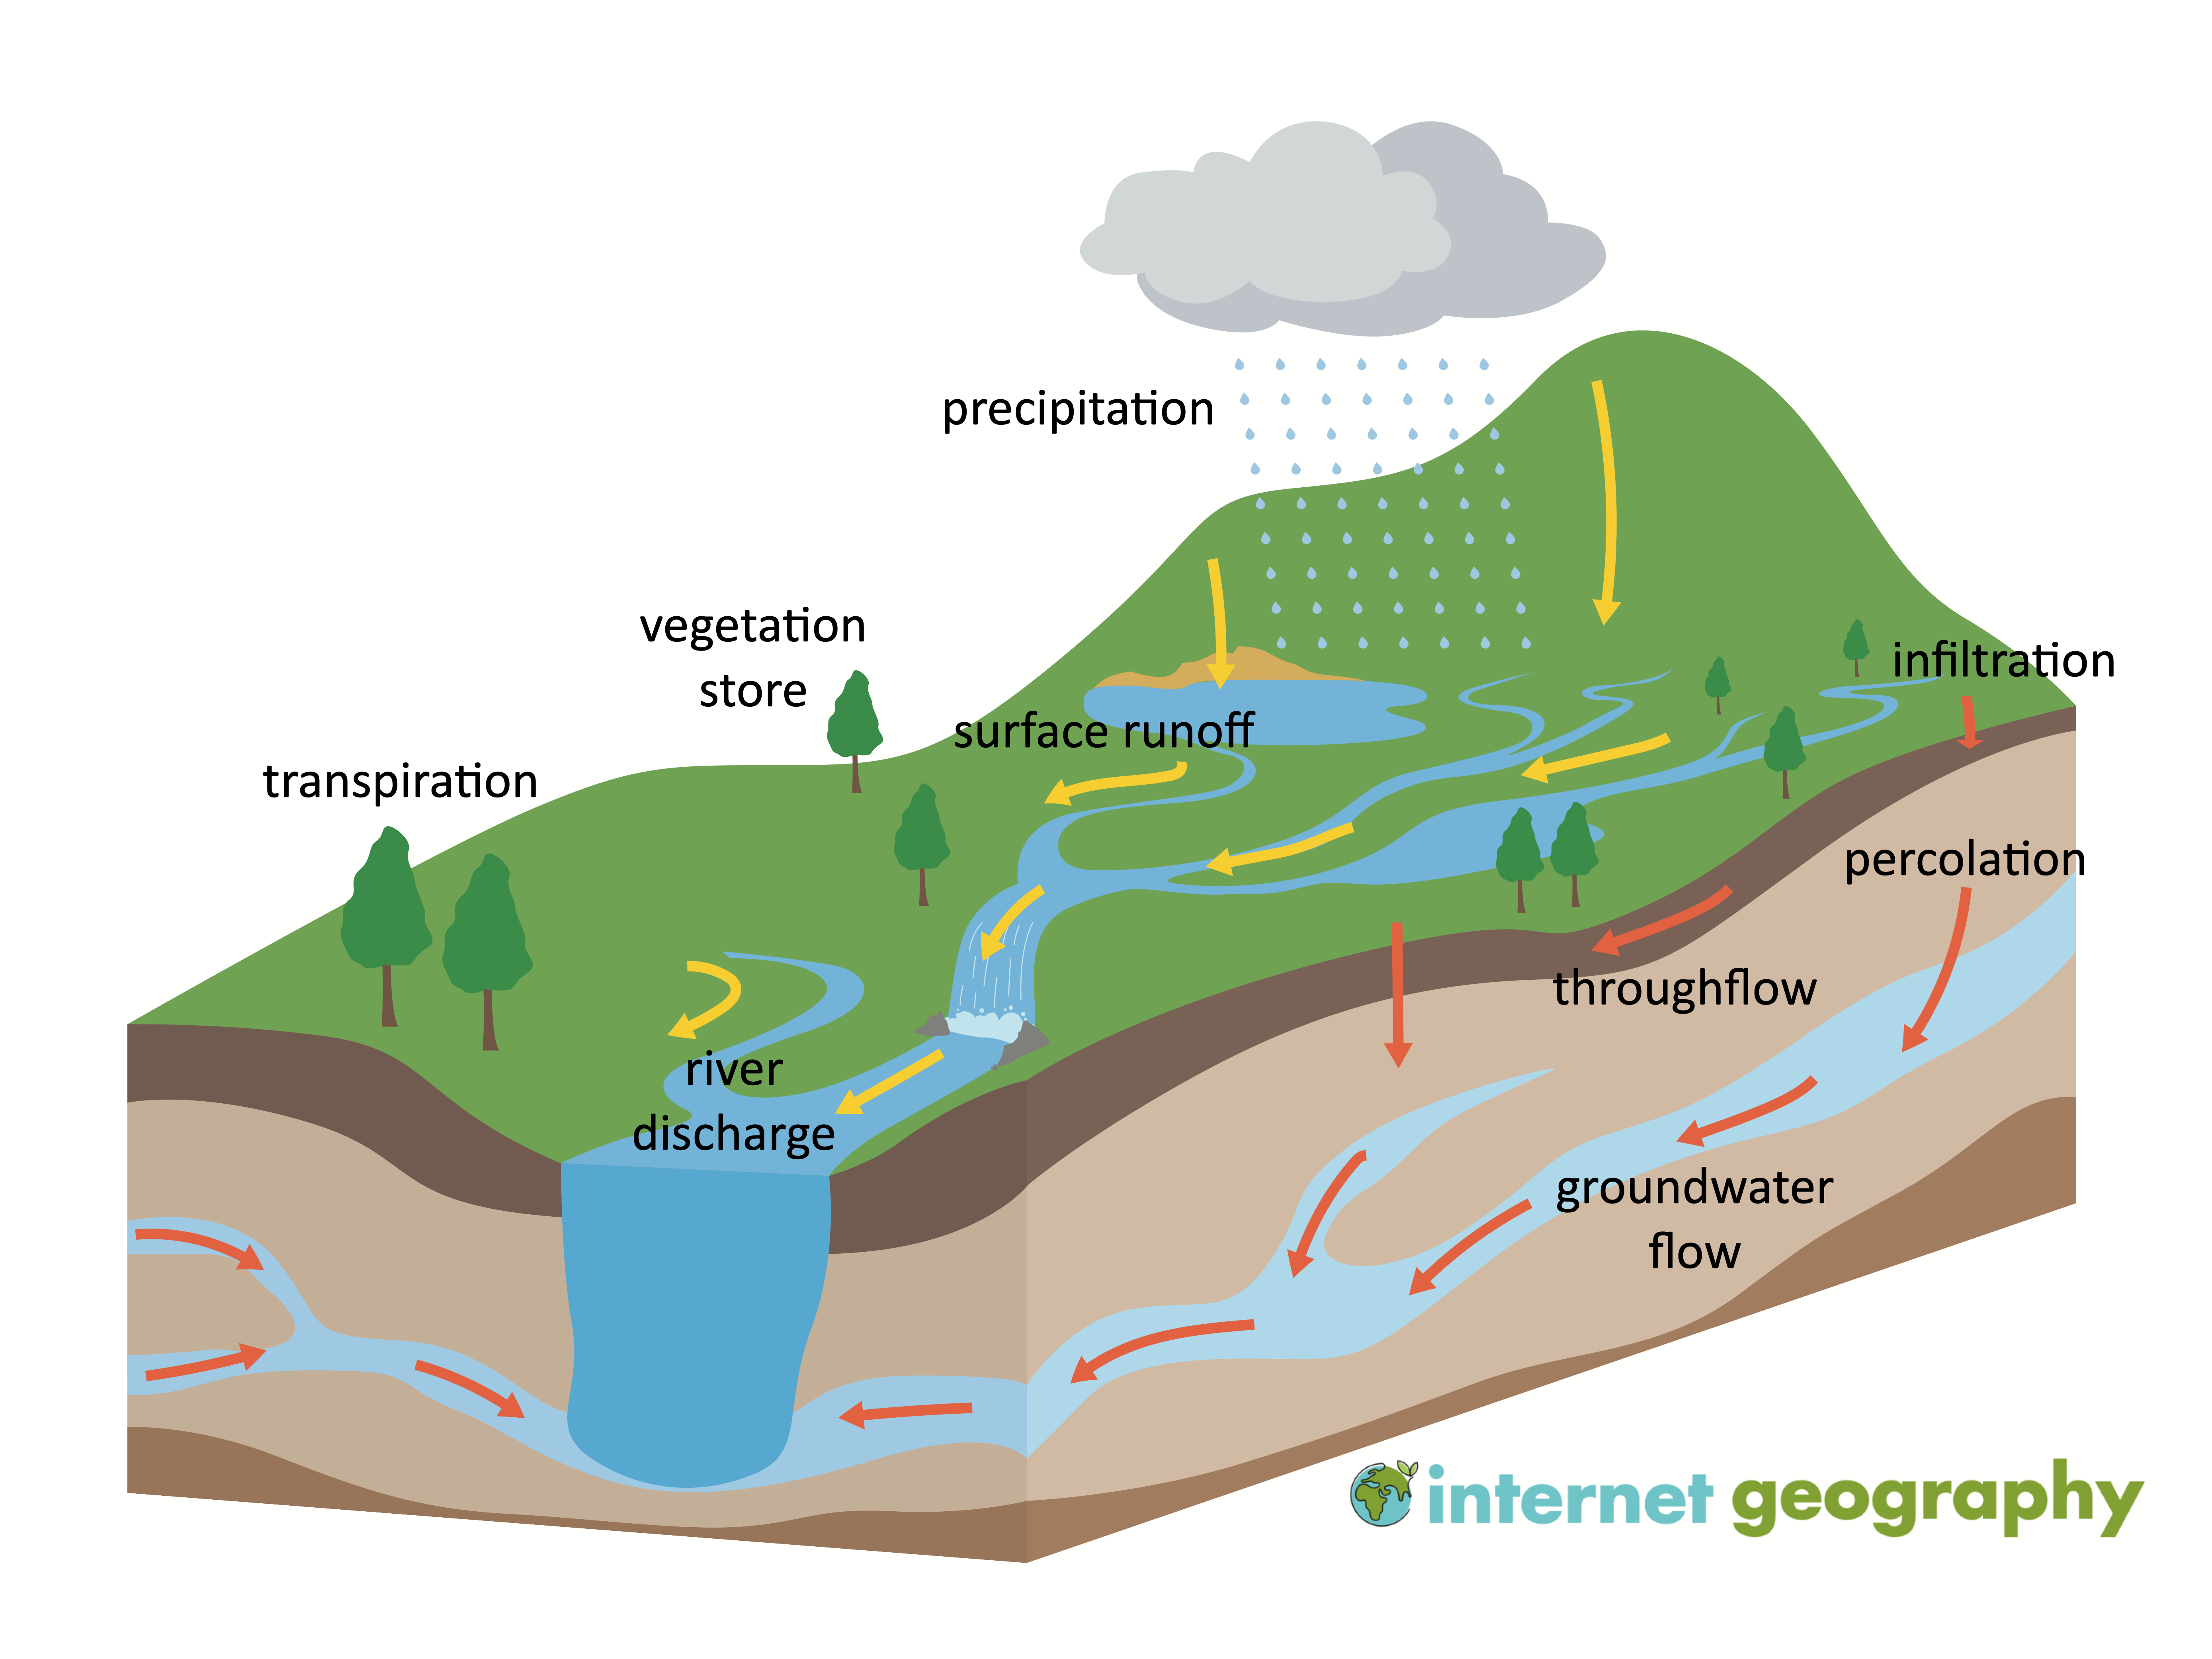 Drainage basin hydrological cycle 